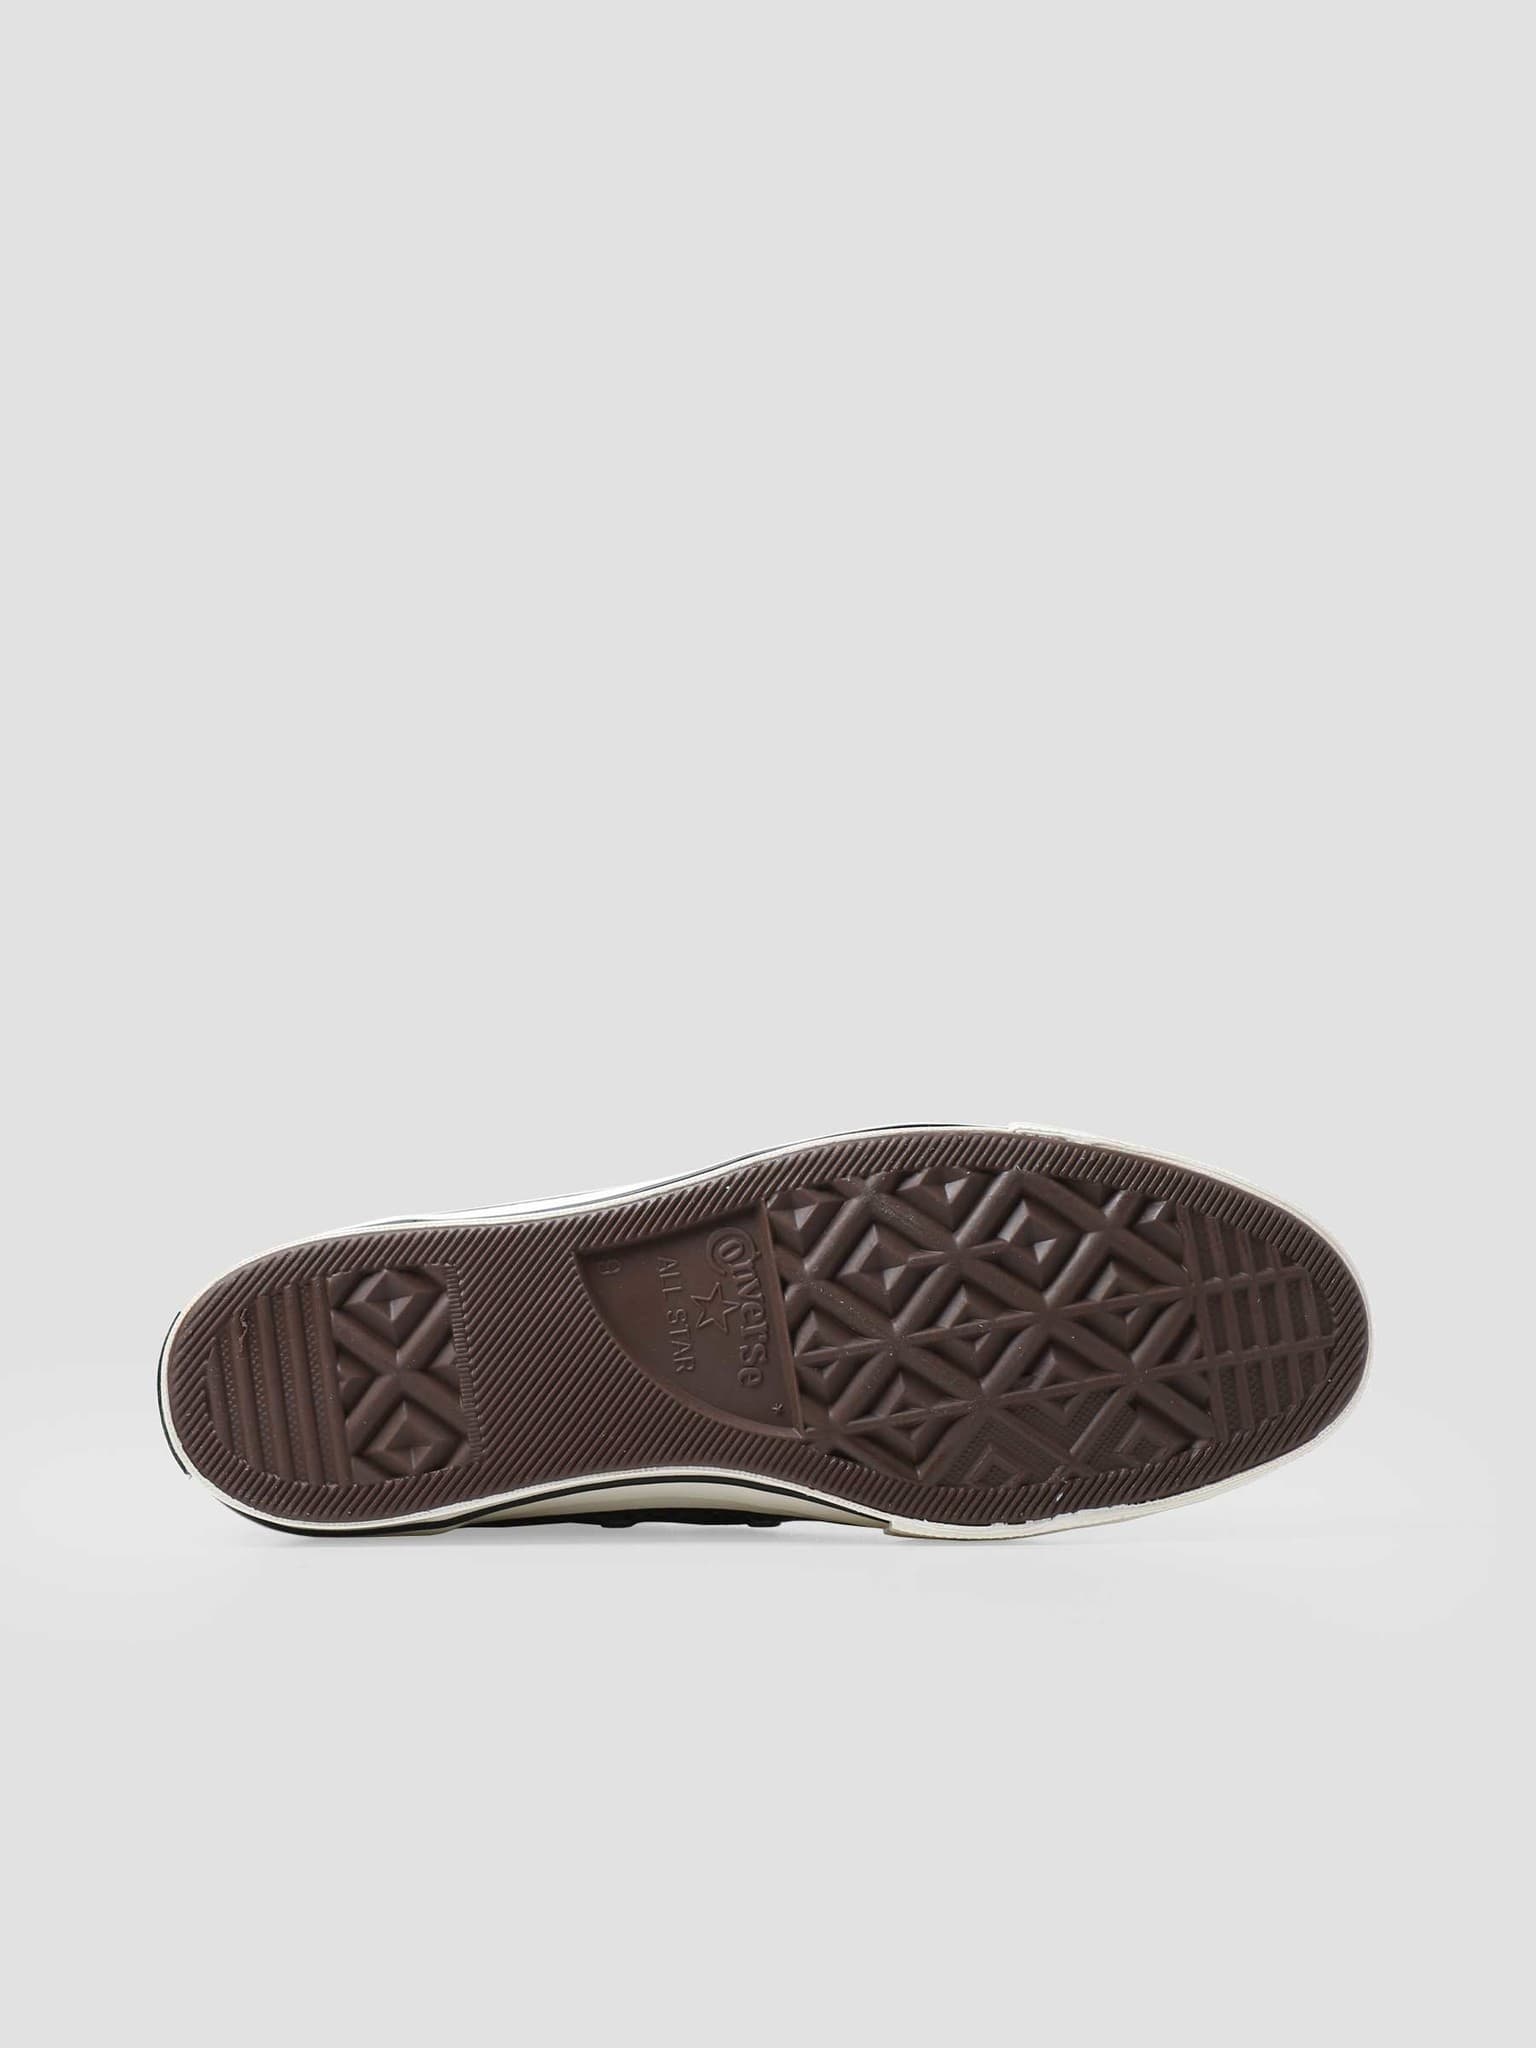 Chuck 70 HI Chocolate Brown Leather 170103C